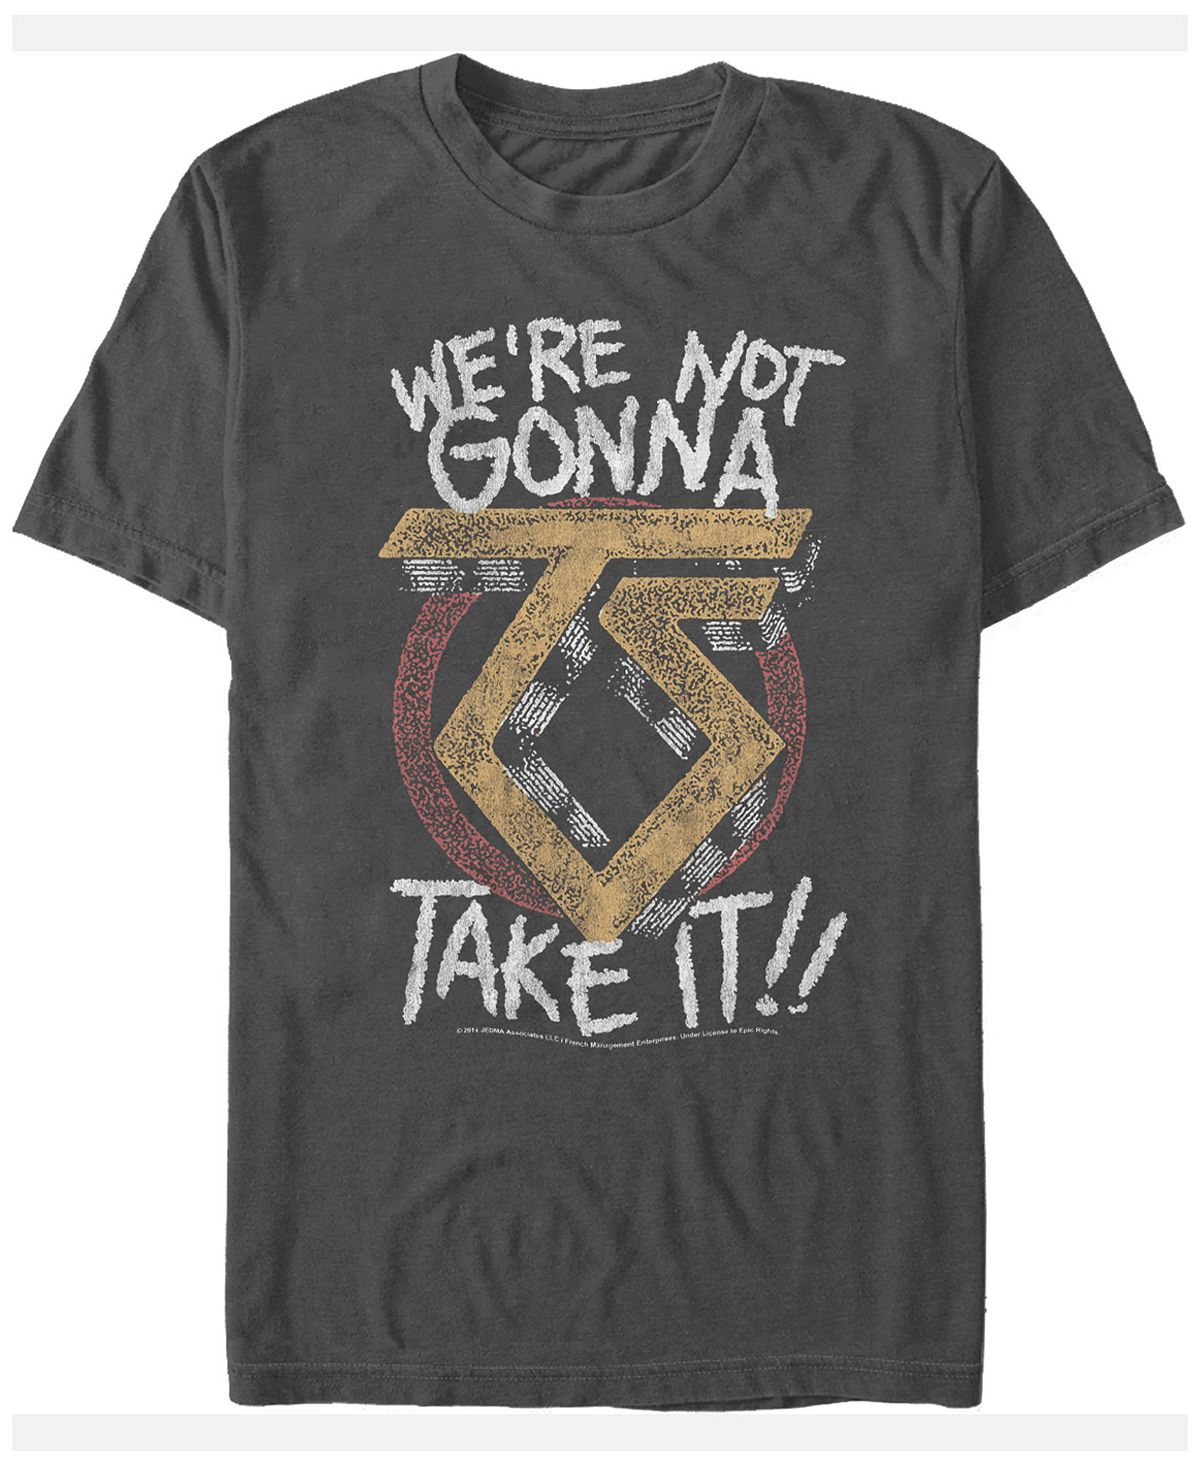 Мужская футболка с короткими рукавами и текстовым логотипом Twisted Sister We're Not Gonna Take It Fifth Sun